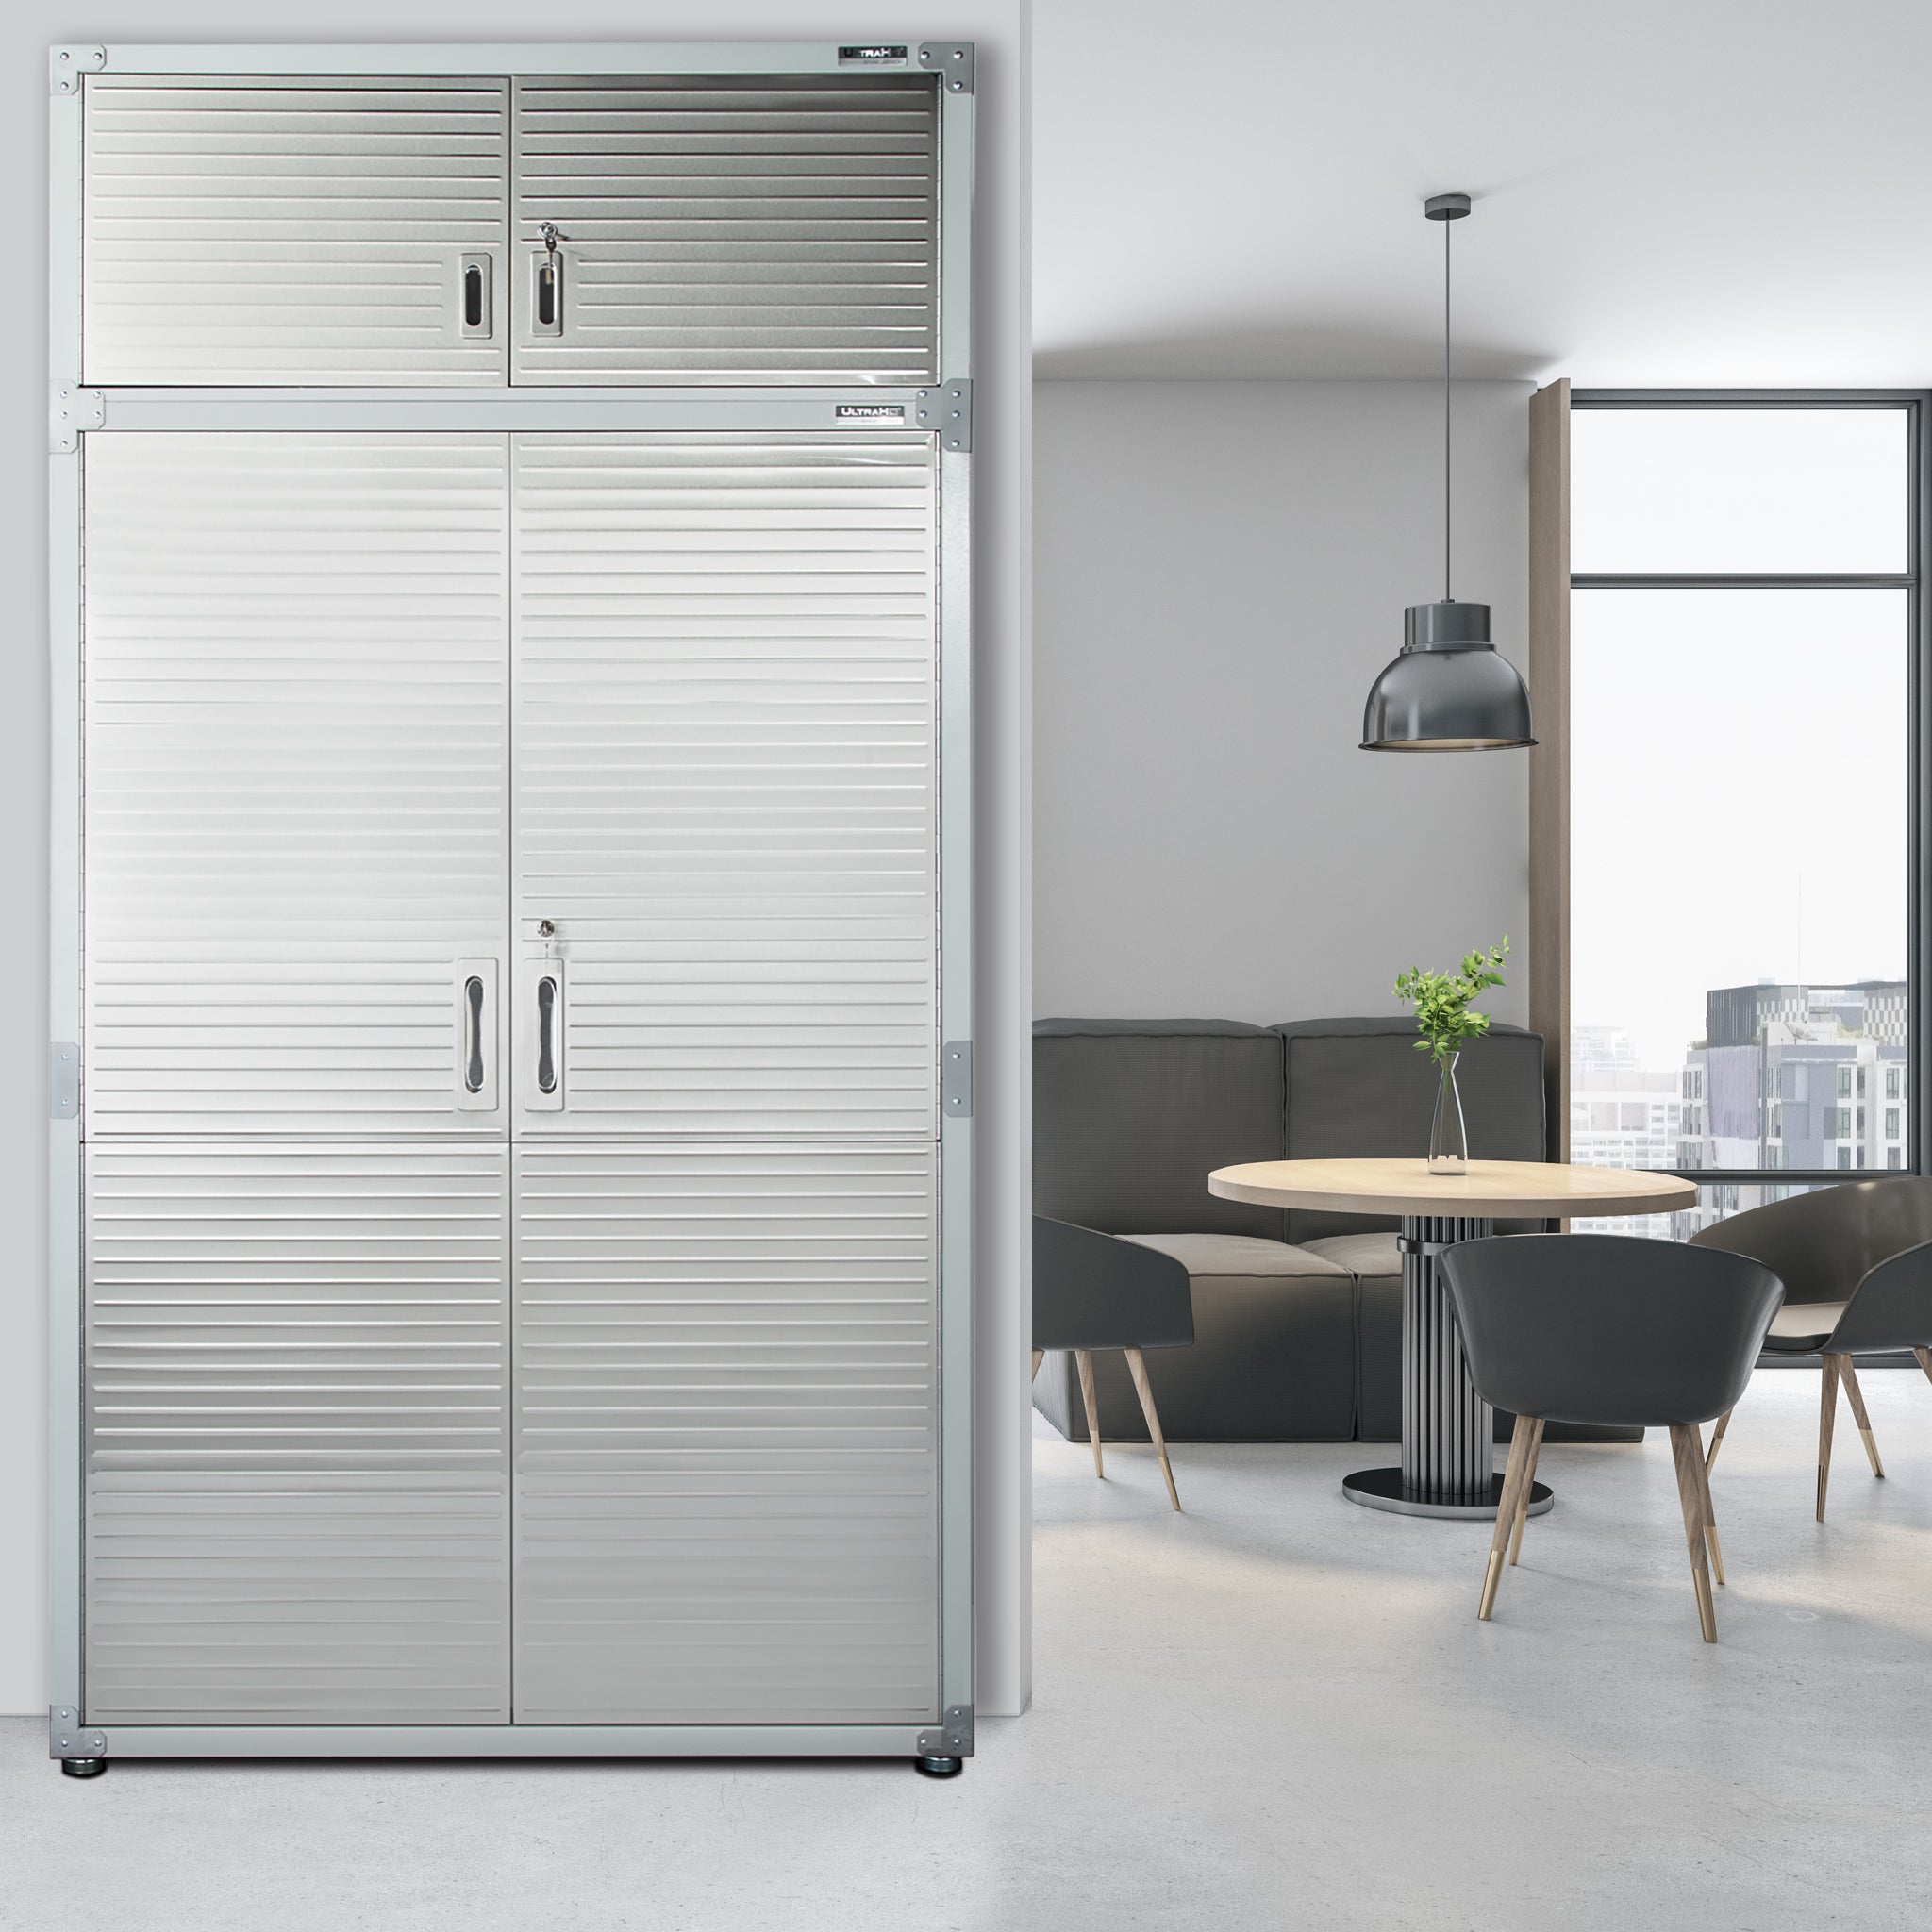 Seville Classics UltraHD Mega 2-Door Lockable Stacker Storage Cabinet, 48 inch W x 24 inch D x 18.5 inch H, Satin Graphite